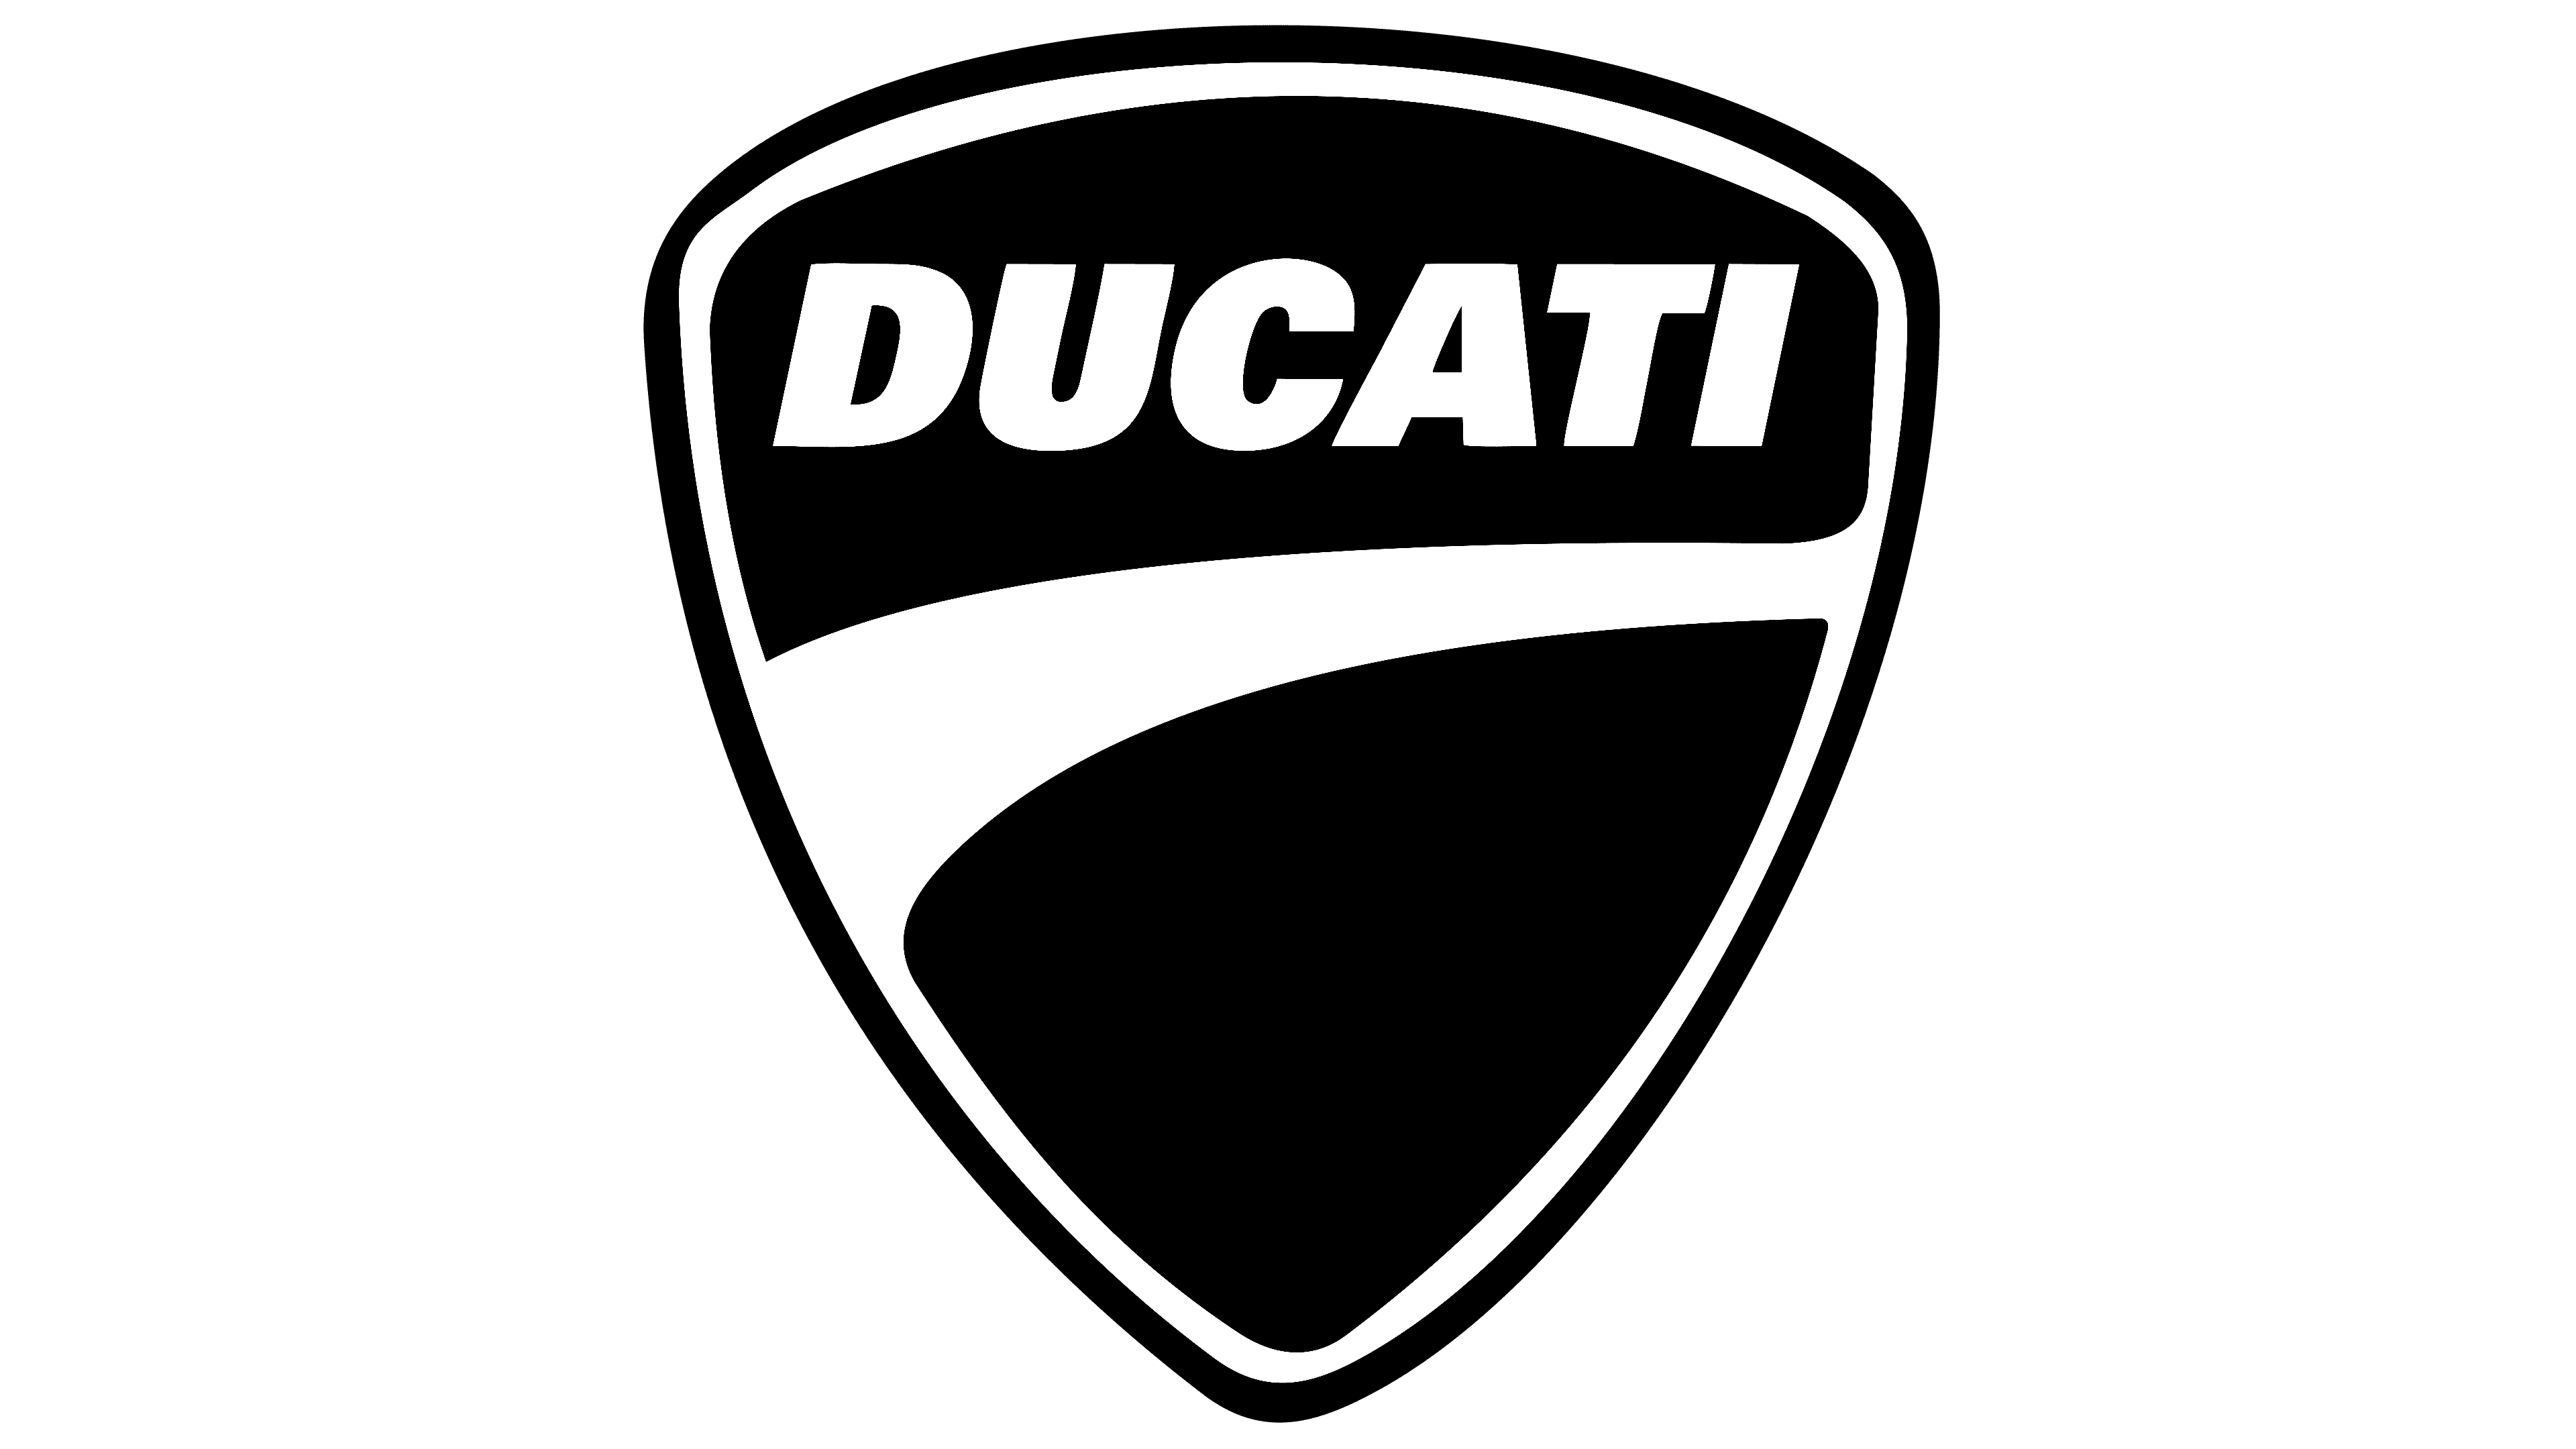 Ducati Motorcycle Logo Hd